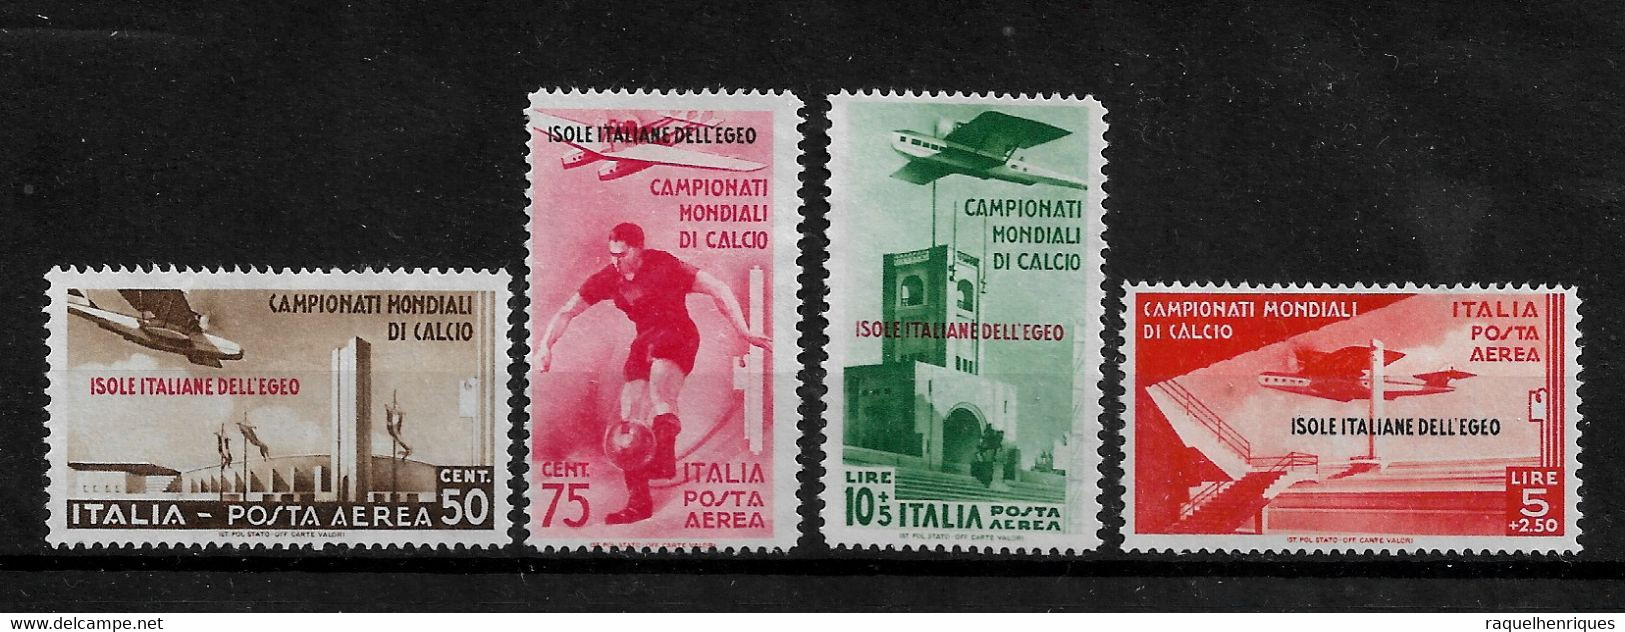 ITALY STAMP - AEGEAN ISLANDS - 1934 Airmail - Football World Cup SET M NG (BA5#108) - Ägäis (Aut. Reg.)